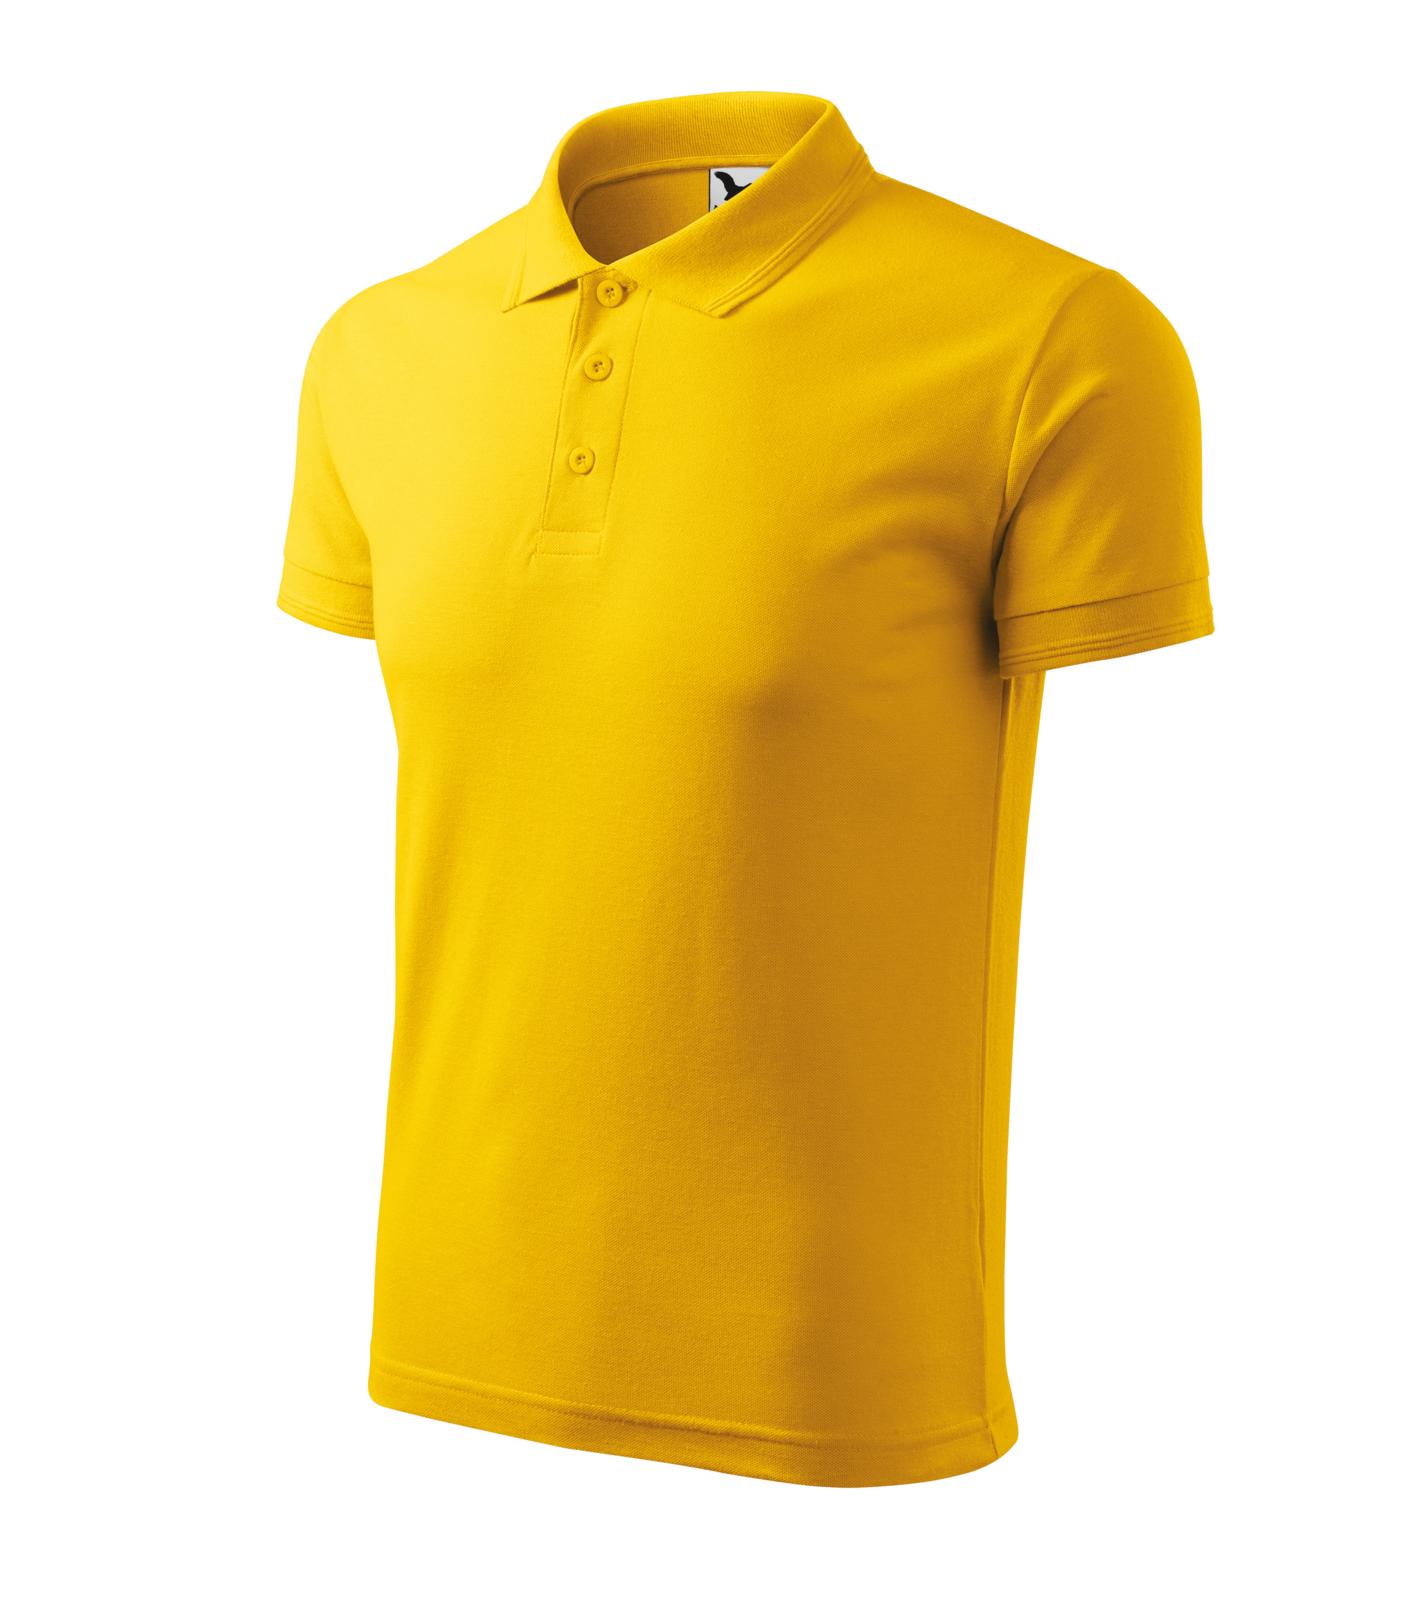 Pique Polo Polokošile pánská Barva: žlutá, Velikost: XL